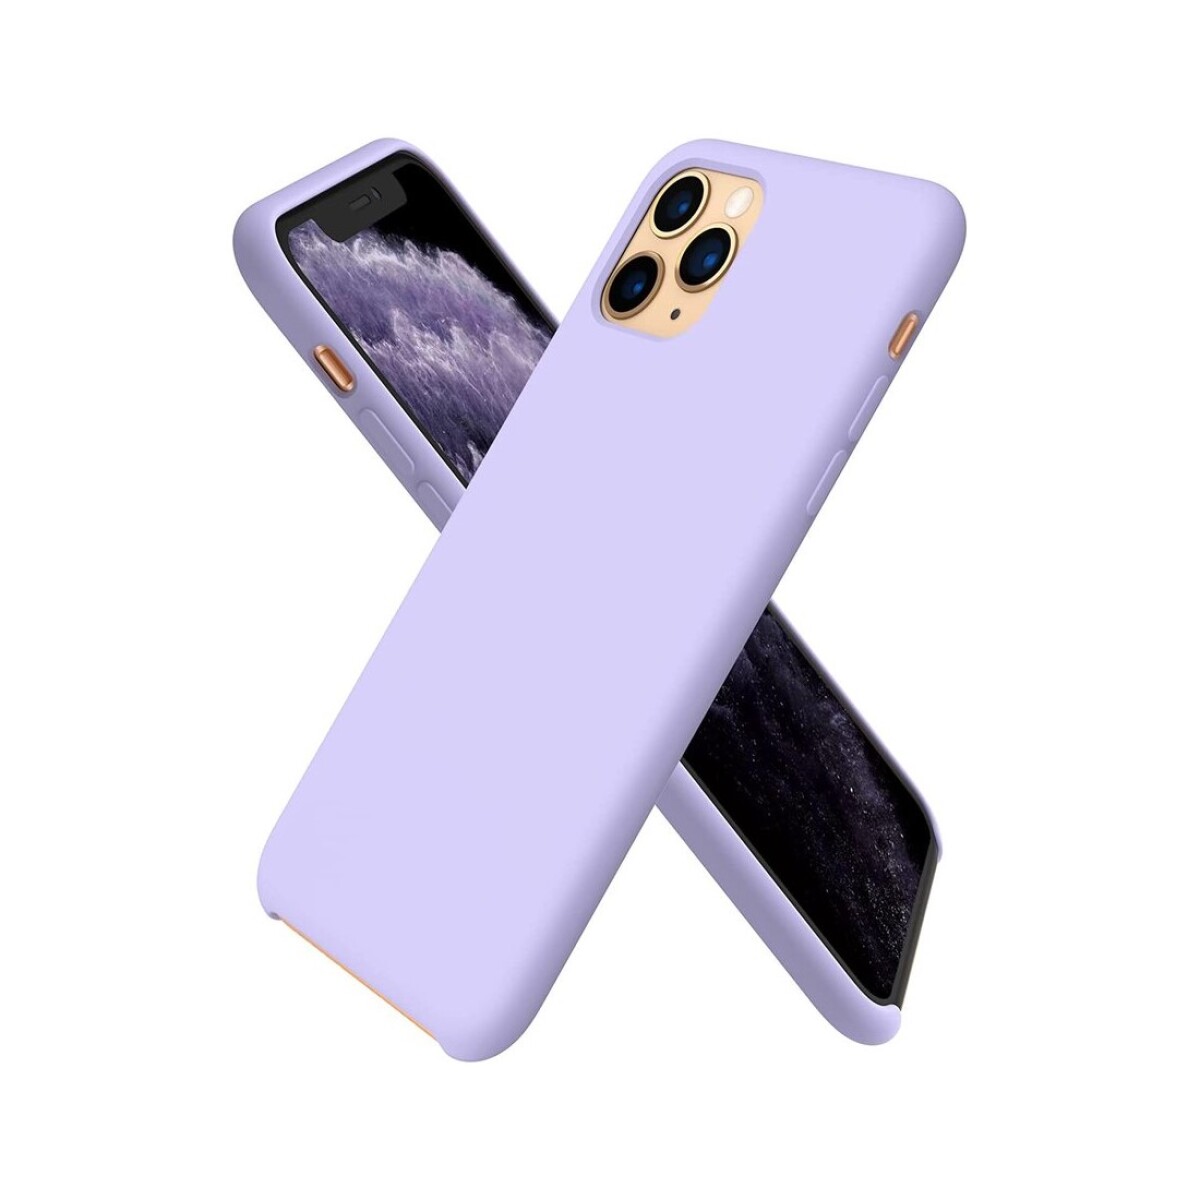 Protector case de silicona para iphone 11 pro max Lila pastel